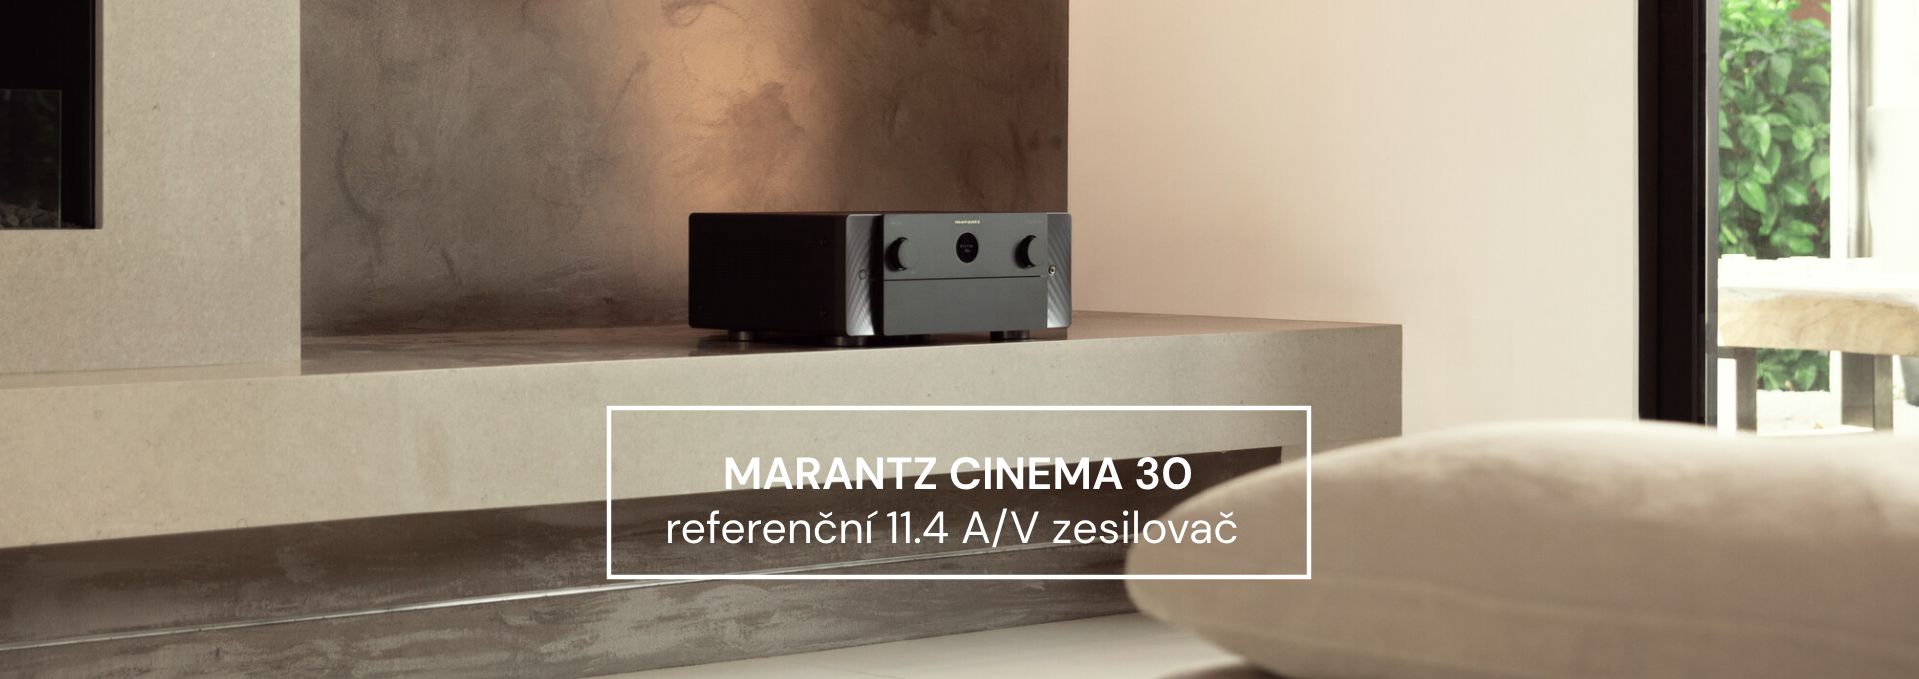 Marantz CINEMA 30